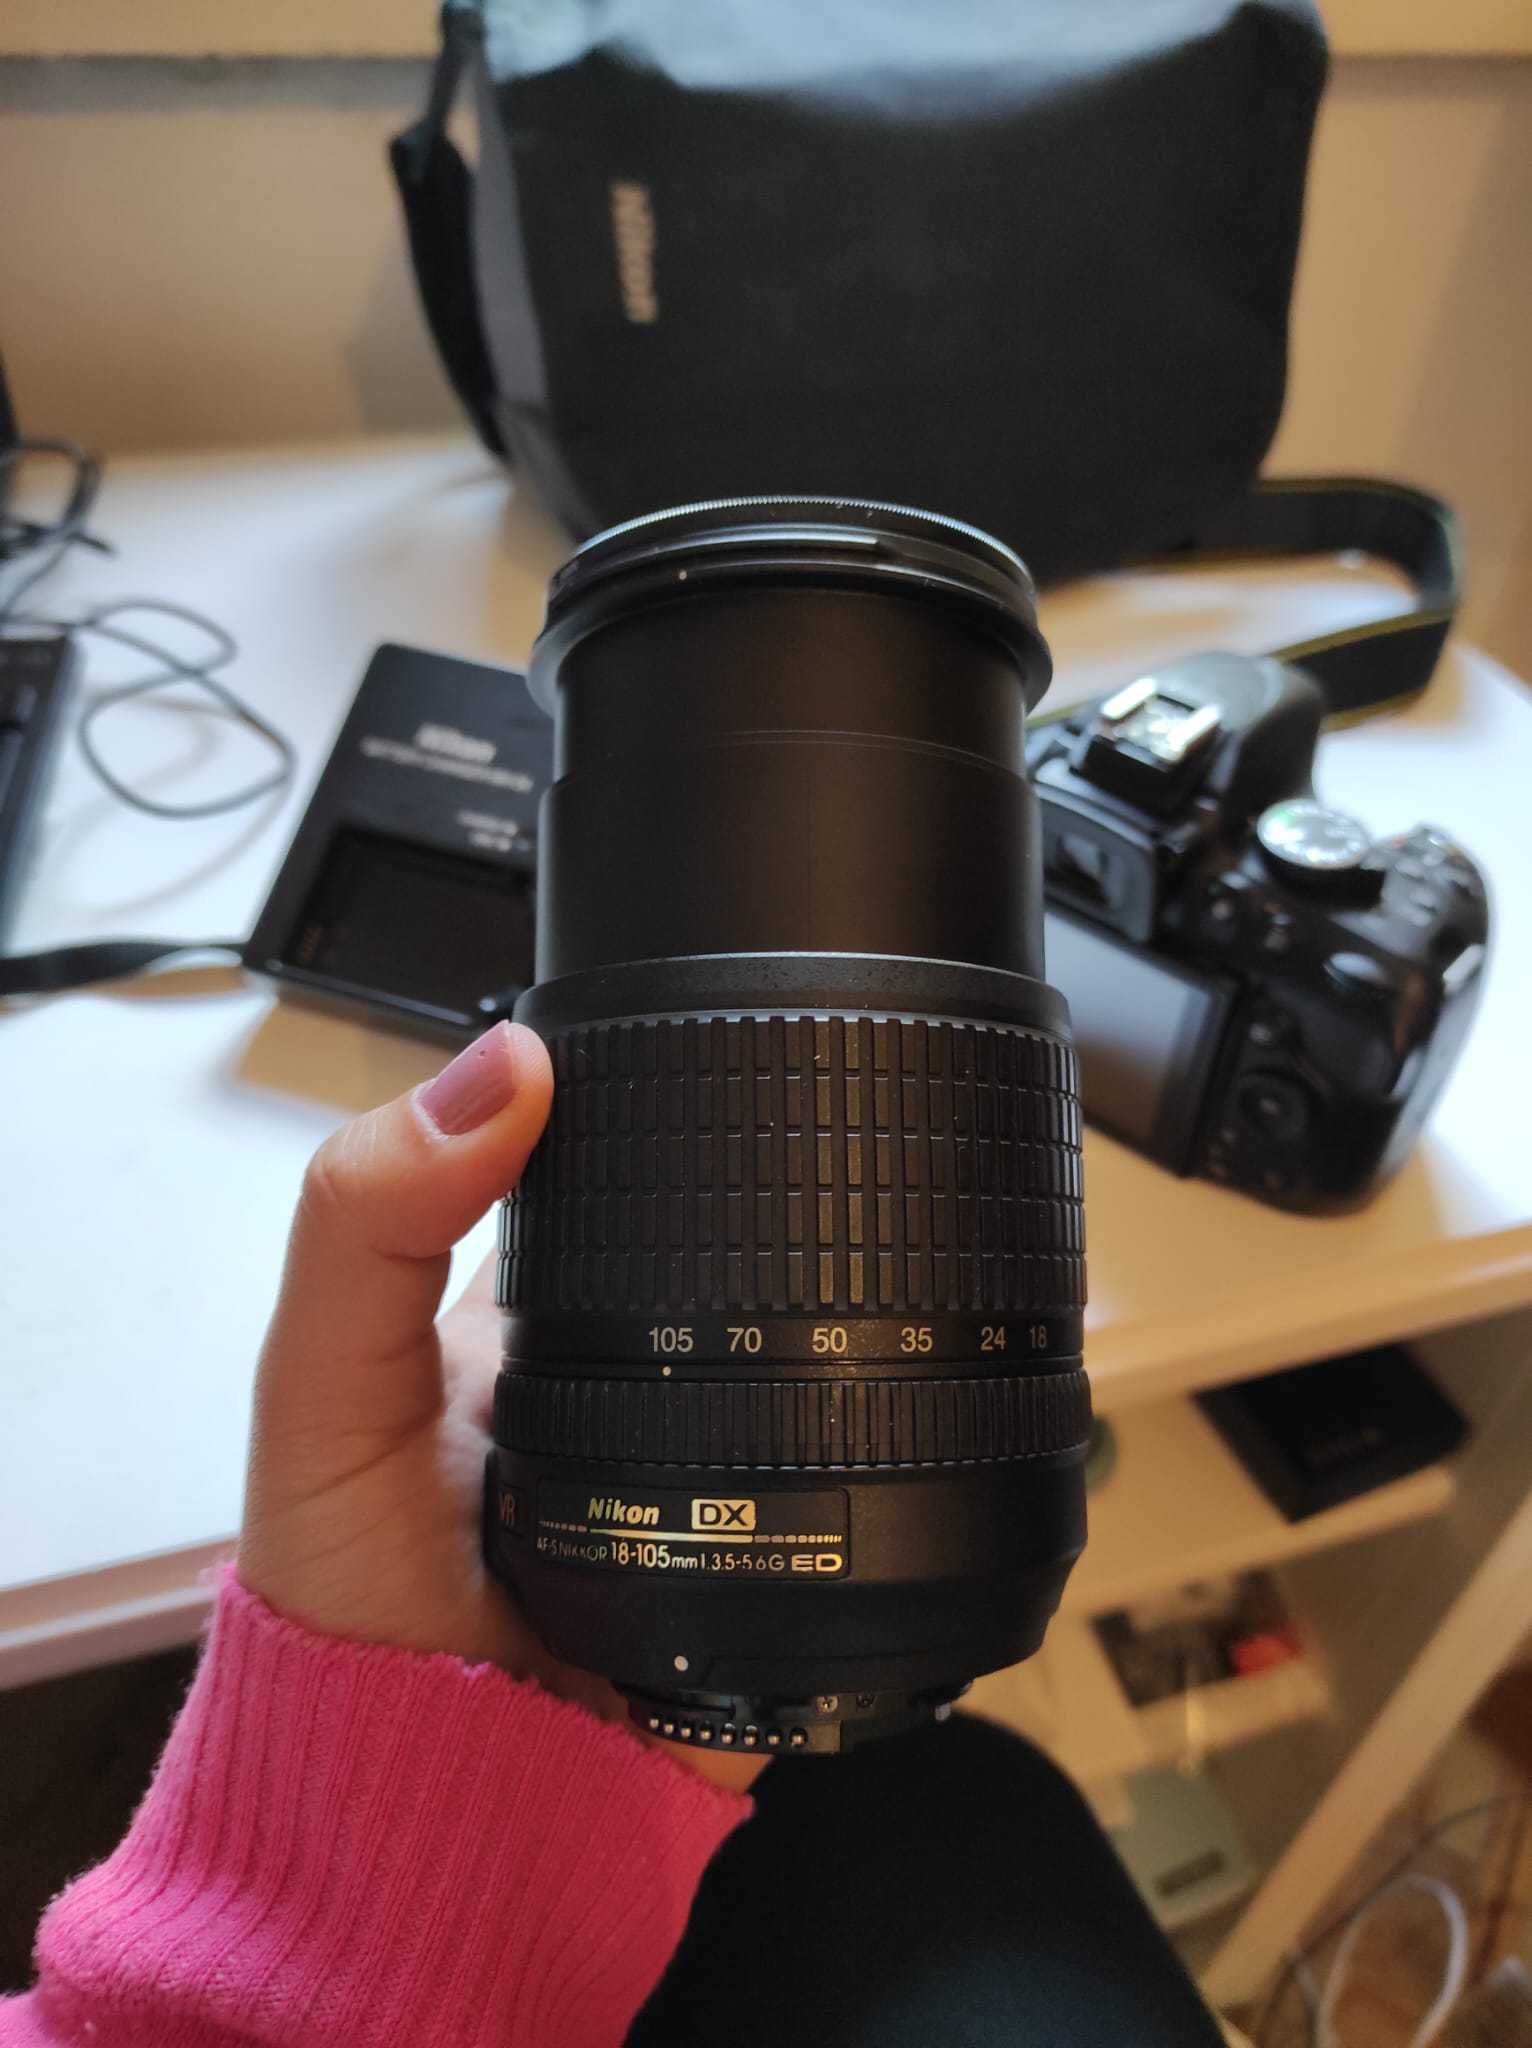 Nikon D5200 + lente ojetiva 18 - 105mm f/3.5-5.6G